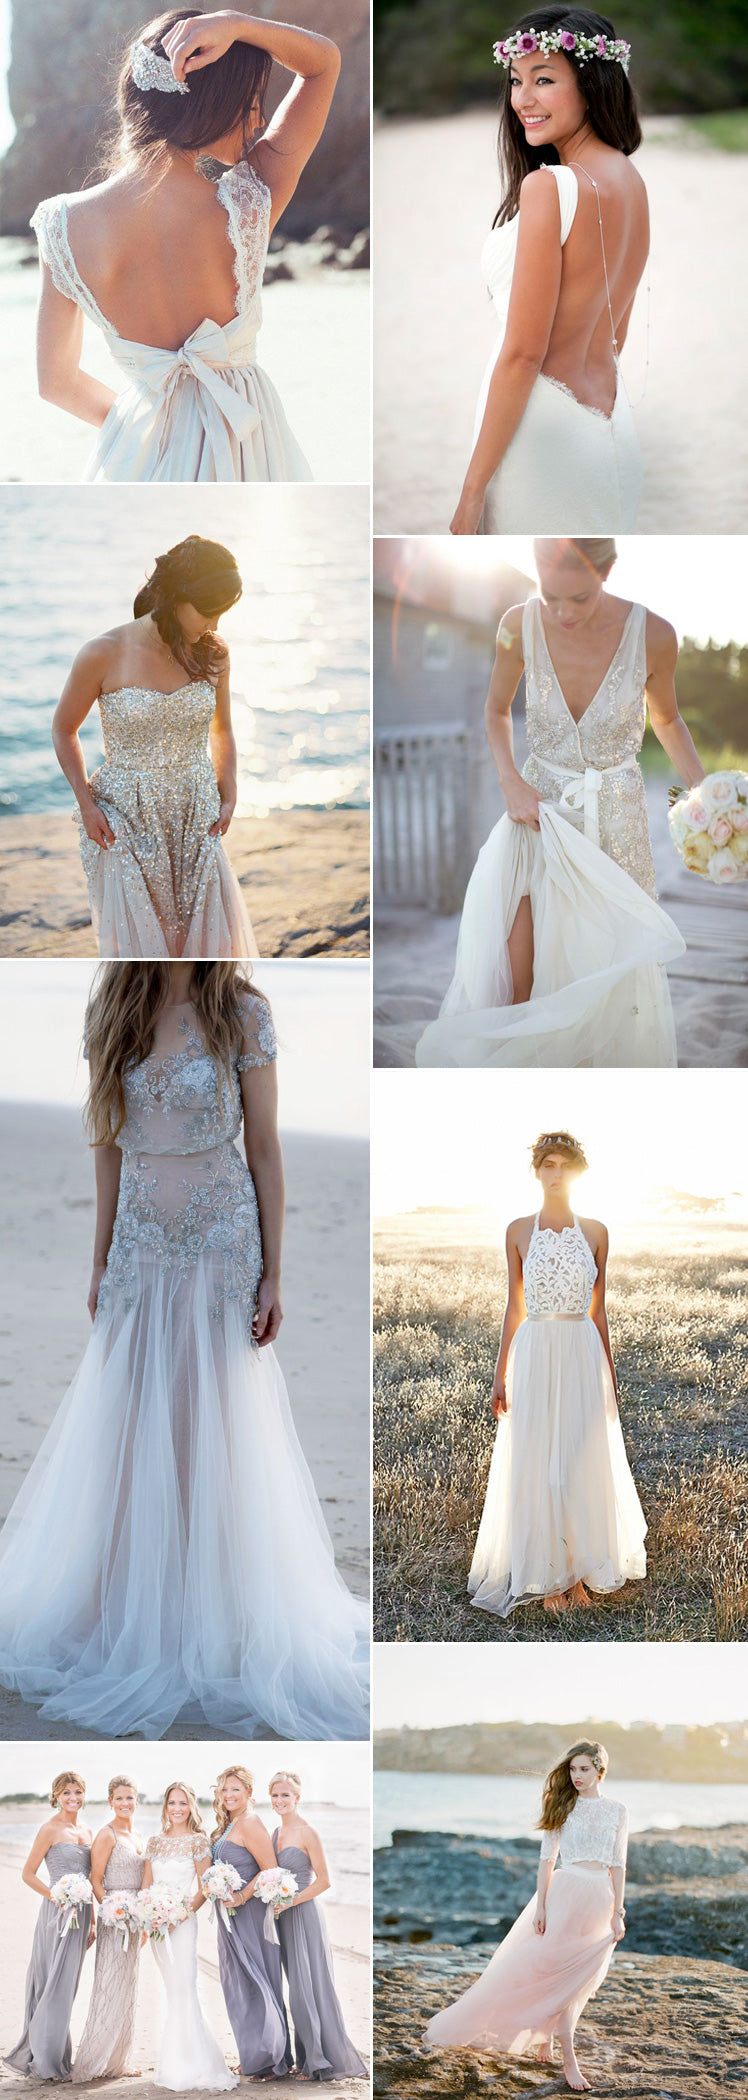 Beach wedding gown inspiration